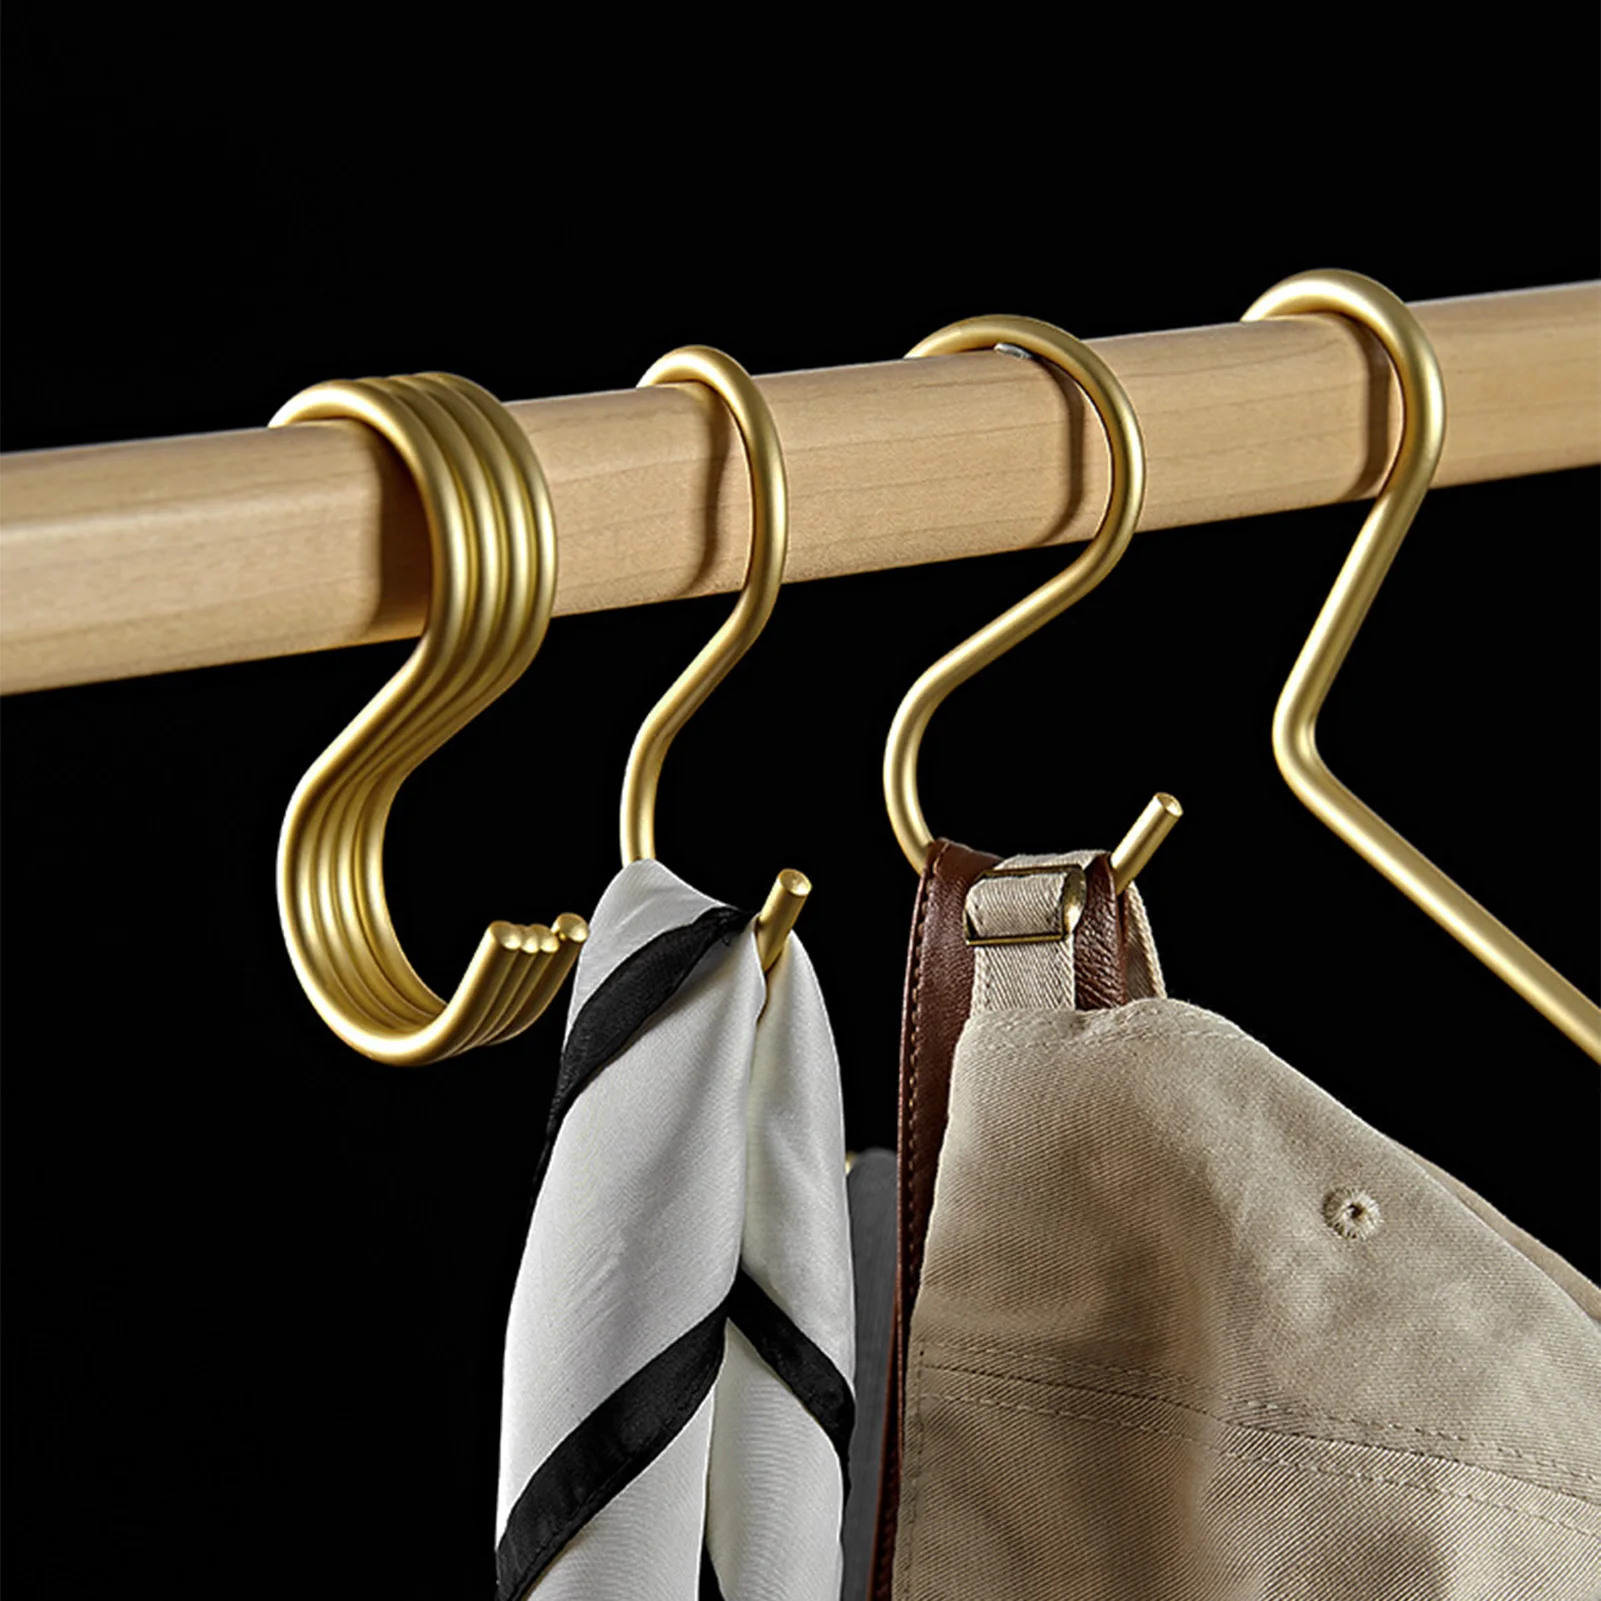 

5pcs Aluminium Alloy S Shape Hooks Practical Kitchen Railing Hanger Hook Clasp Holder Hooks For Hanging Clothes Handbag Hooks